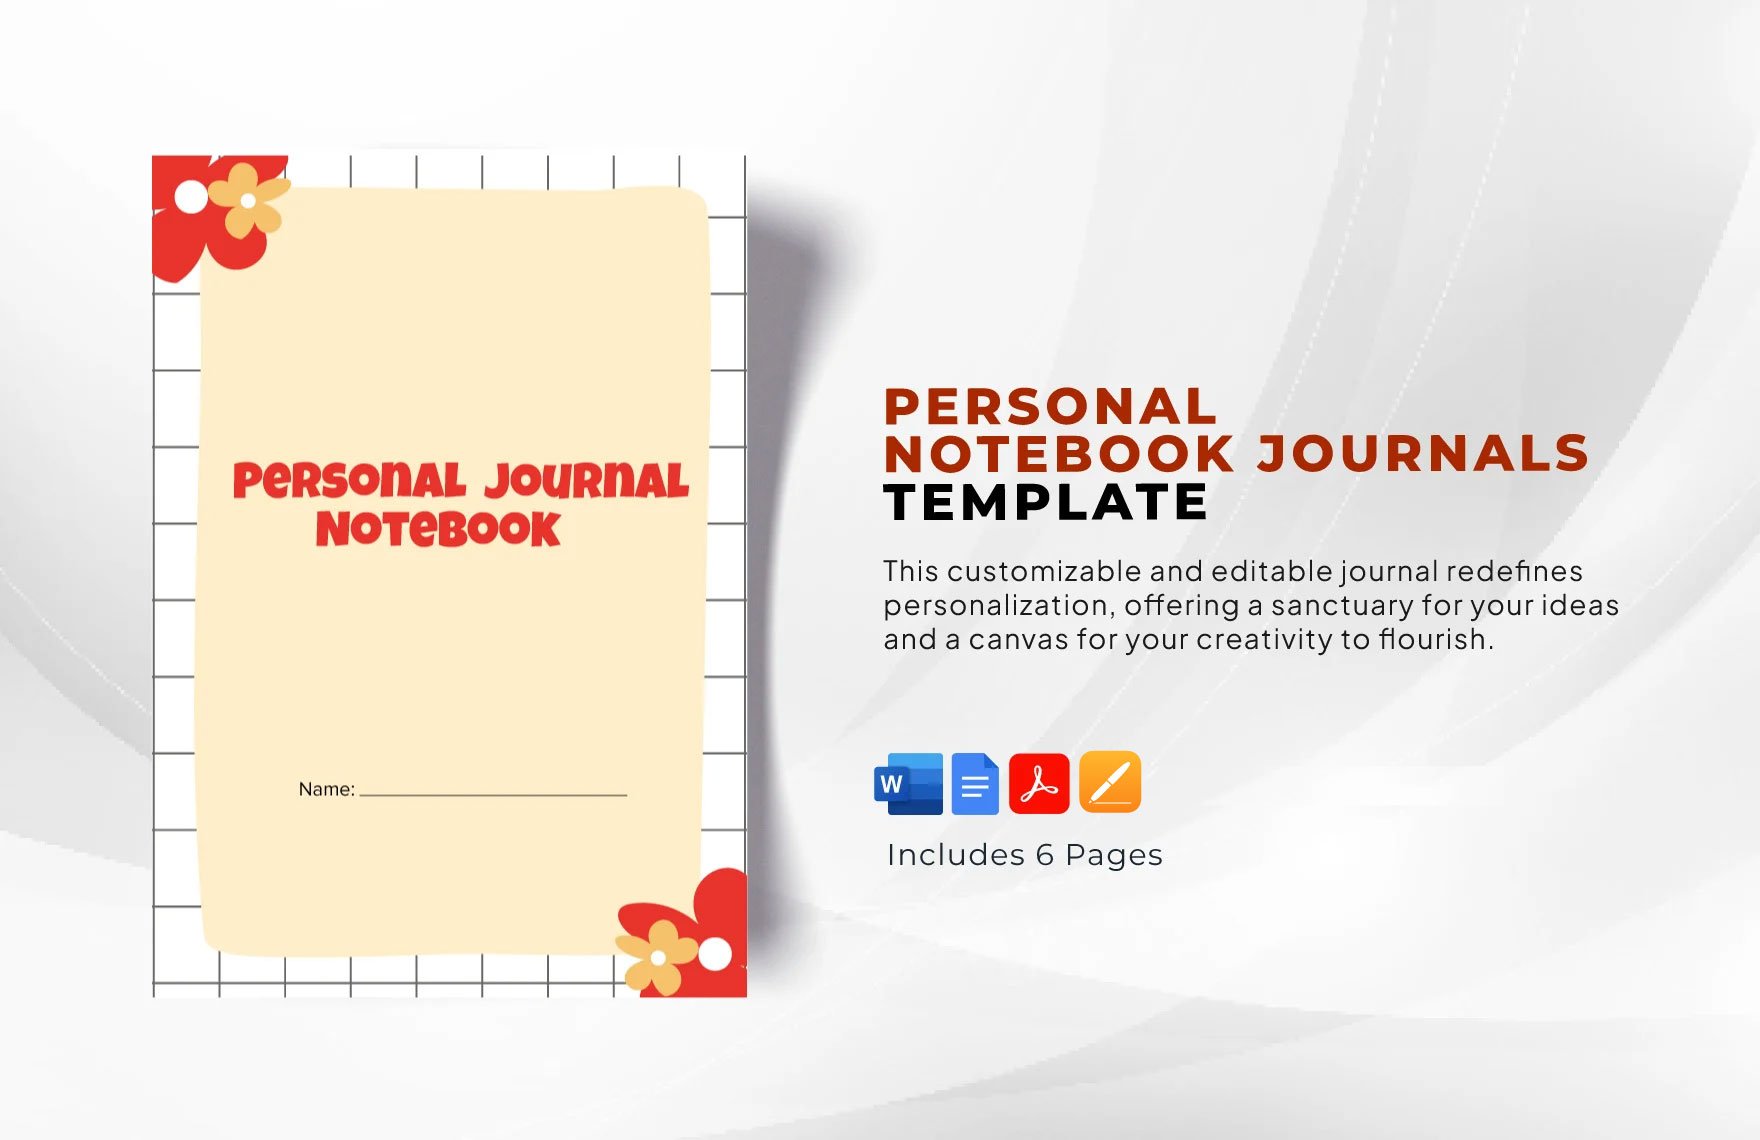 Personal Notebook Journals Template